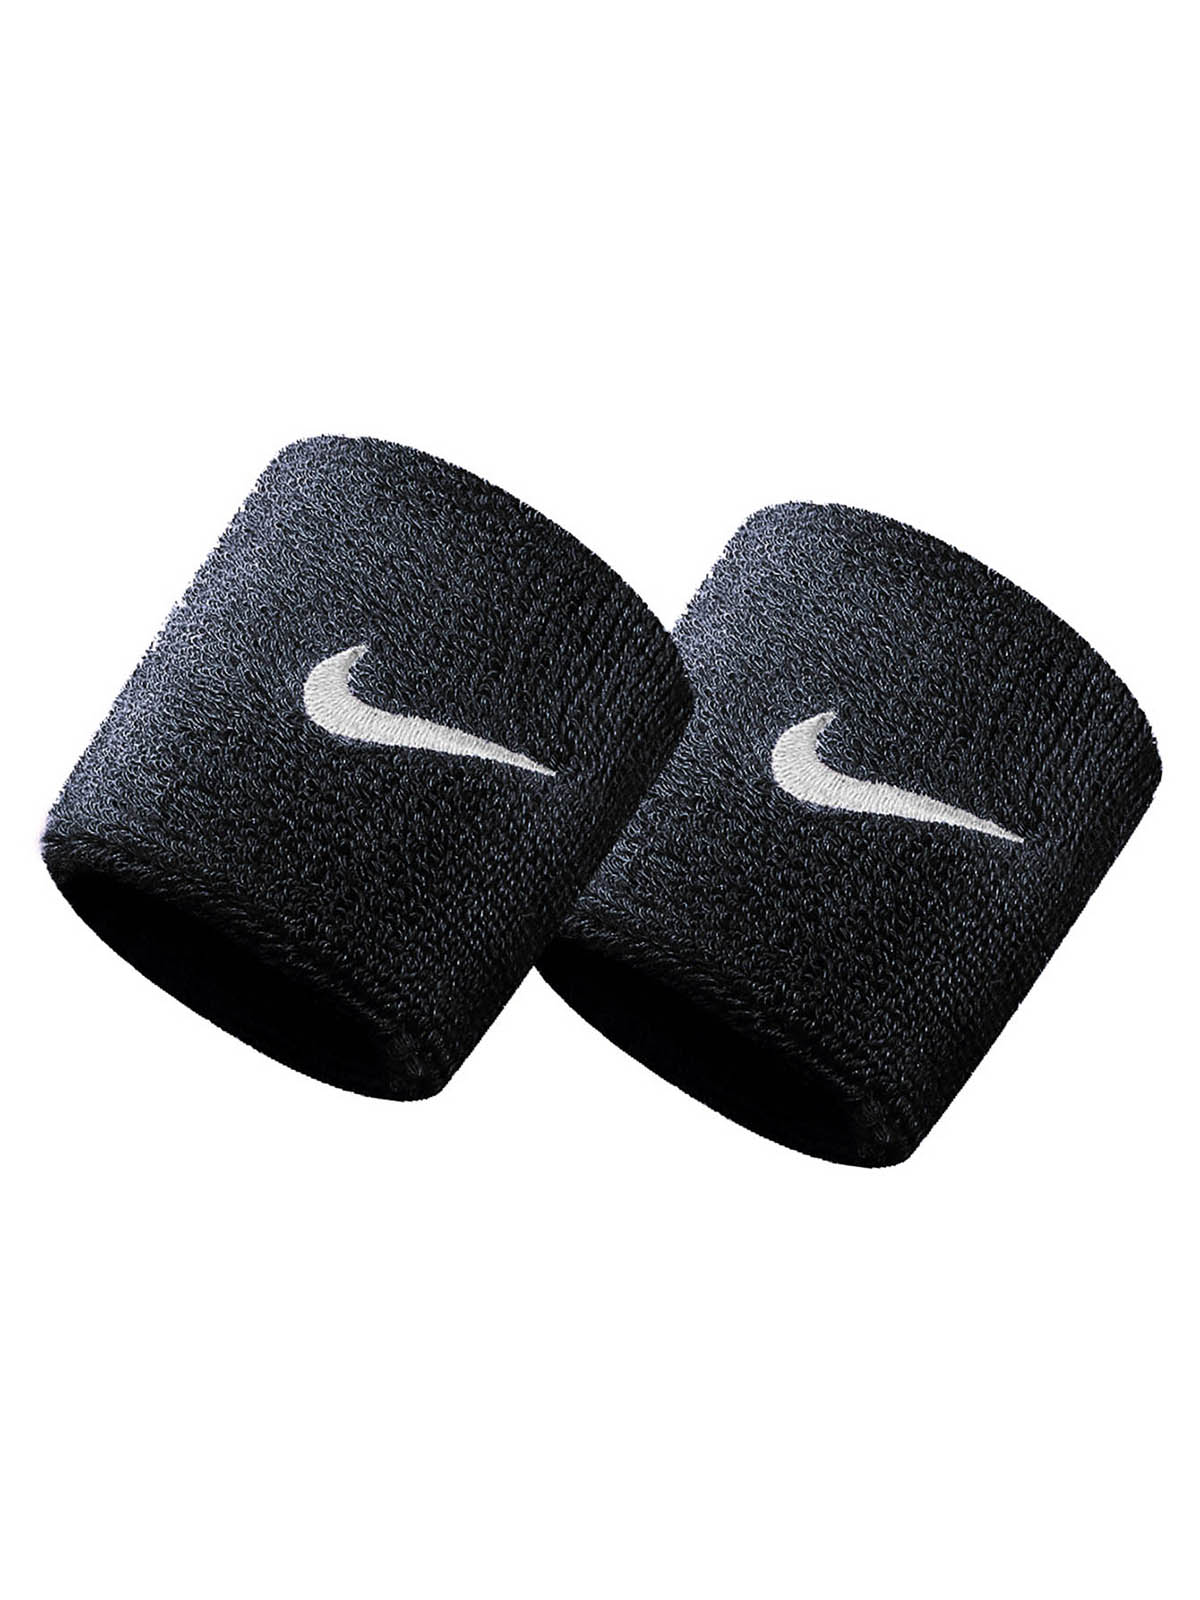 Polsini Uomo Nike - Swoosh Wristbands - Nero